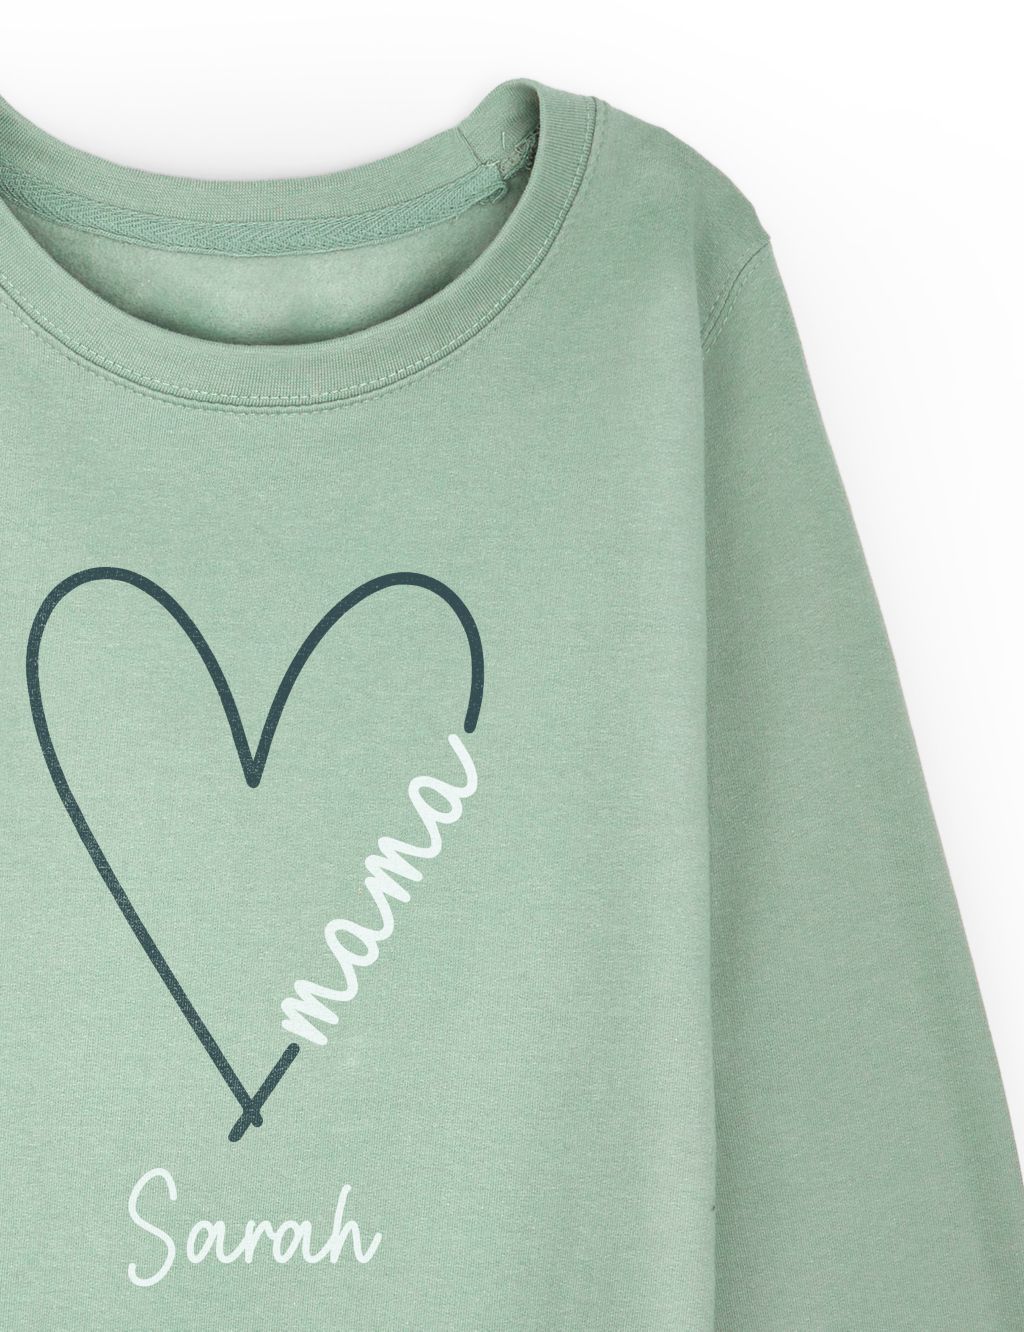 Personalised Ladies Mama Heart Sweatshirt 1 of 3